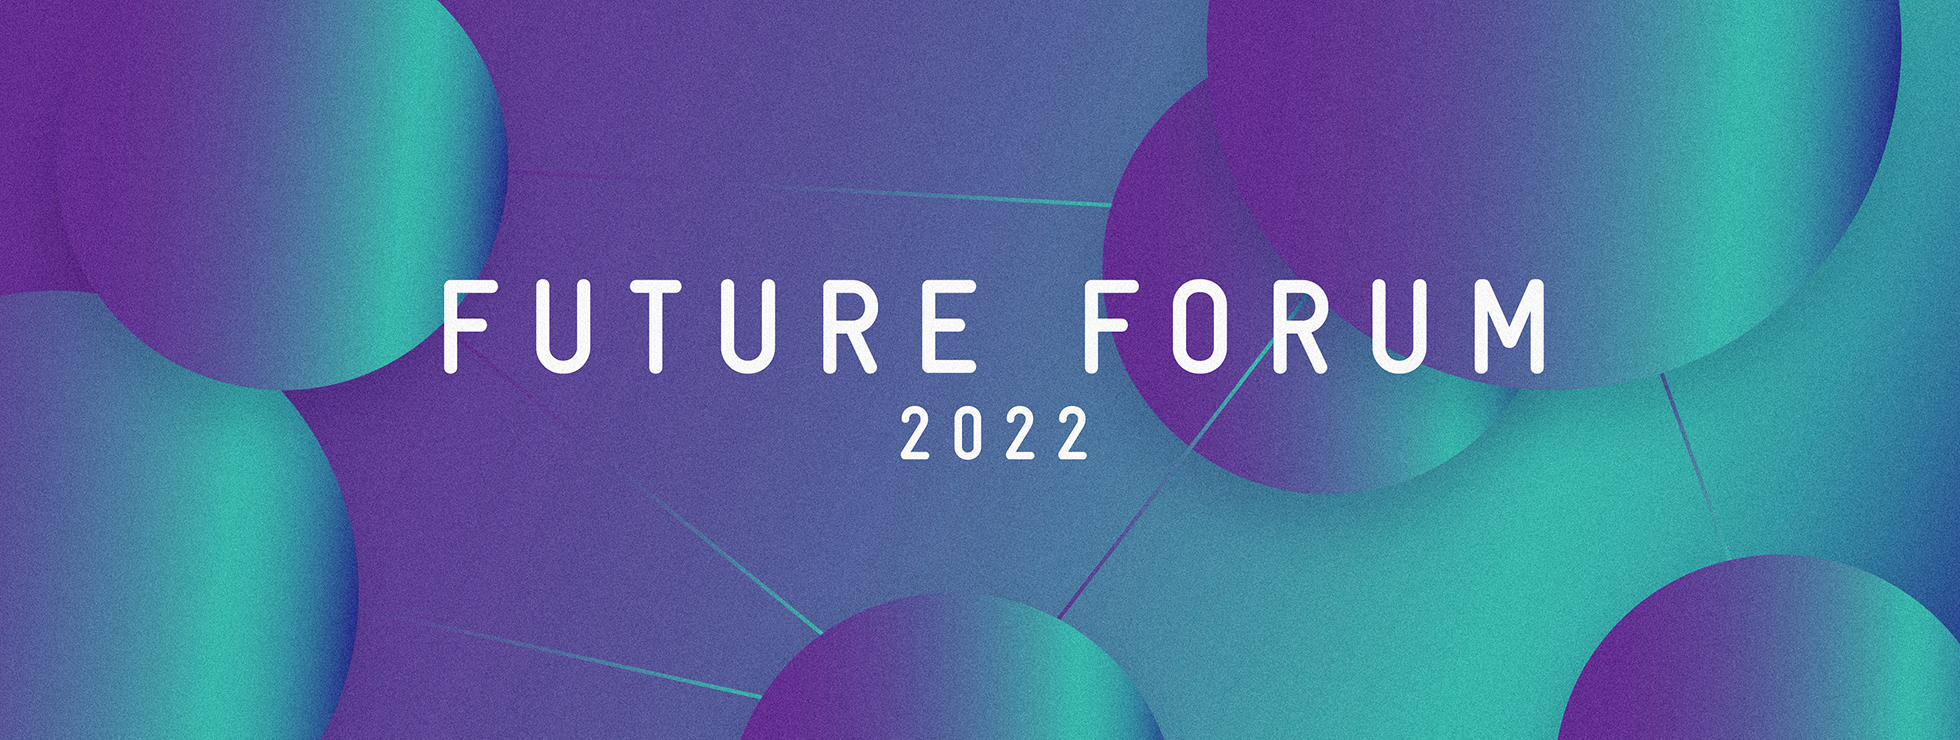 Future Forum 2022 Key Visual